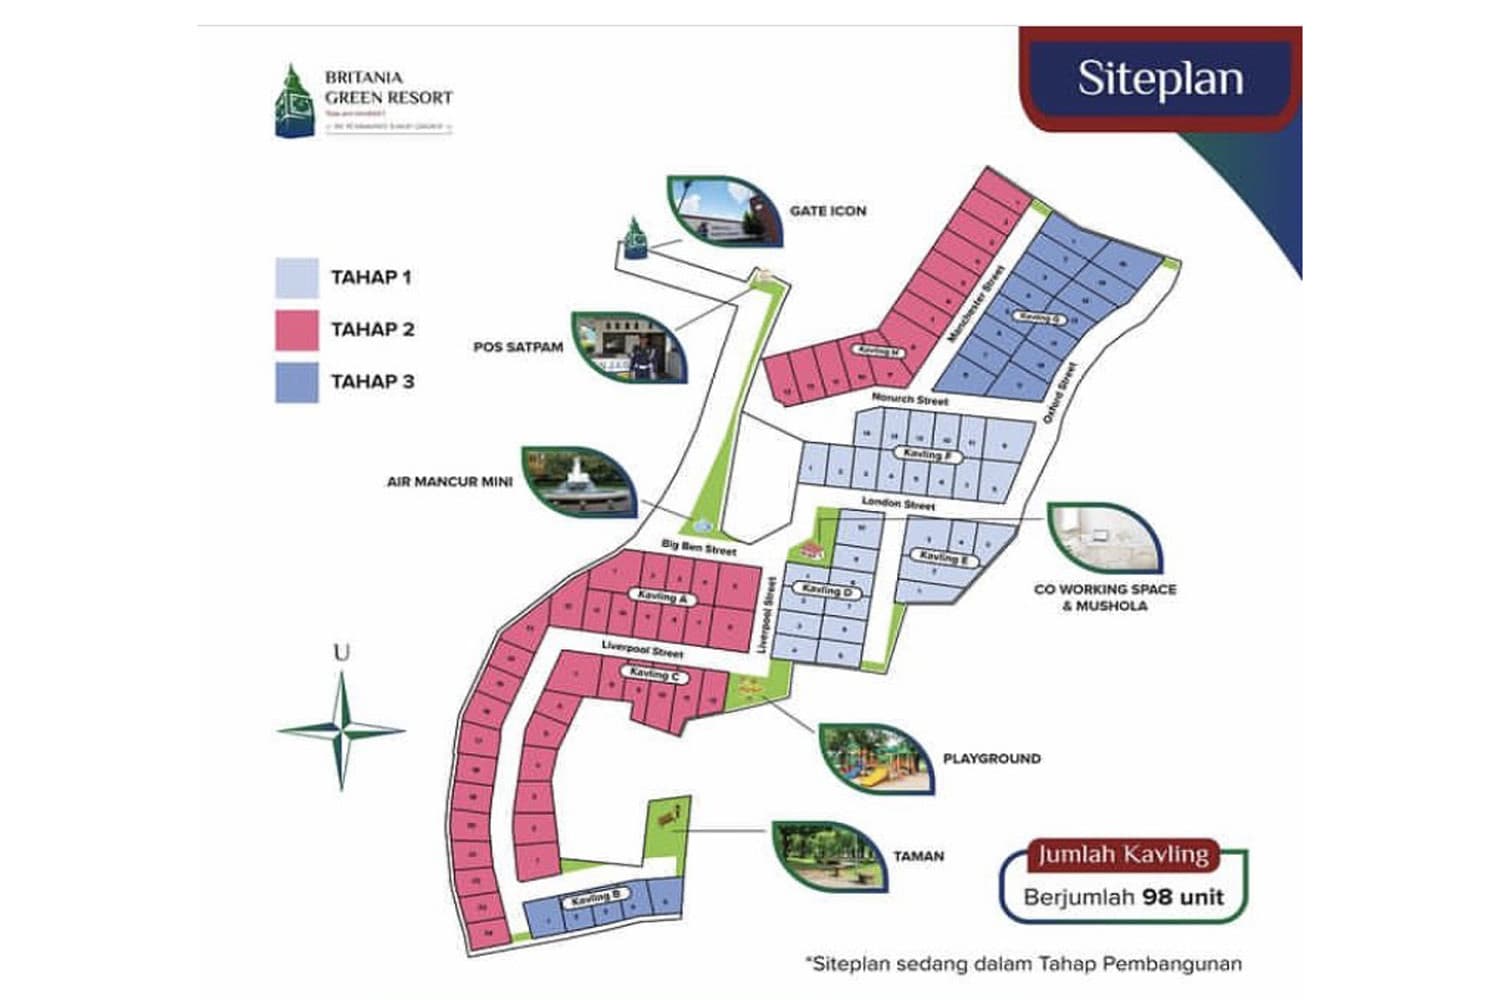 Siteplan Britania Green Resort